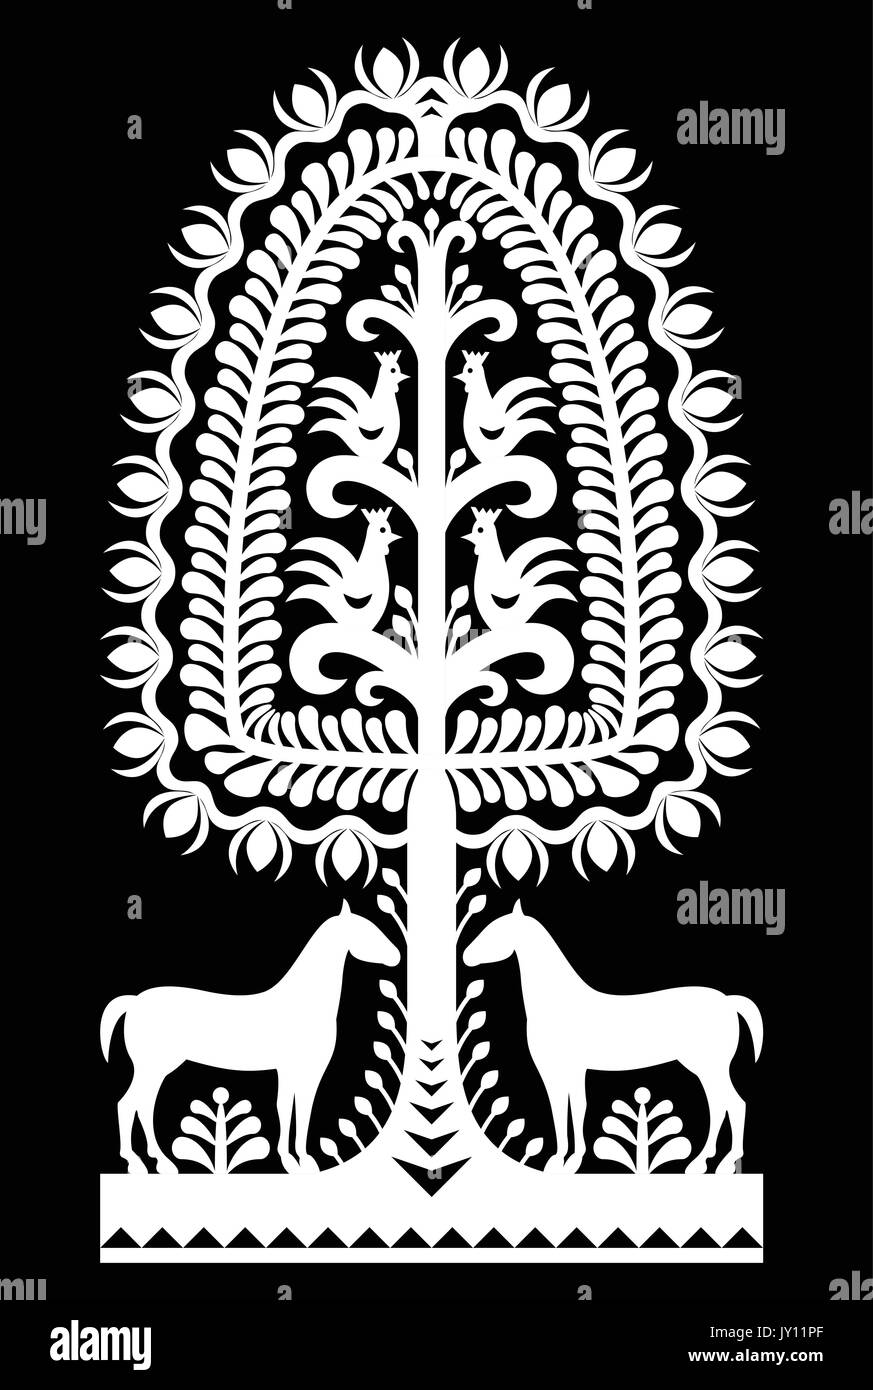 Polish folk art pattern Wycinanki Kurpiowskie - Kurpie Papercuts   Vector design of horse, tree and chickens - folk design from the region of Kurpie Stock Vector